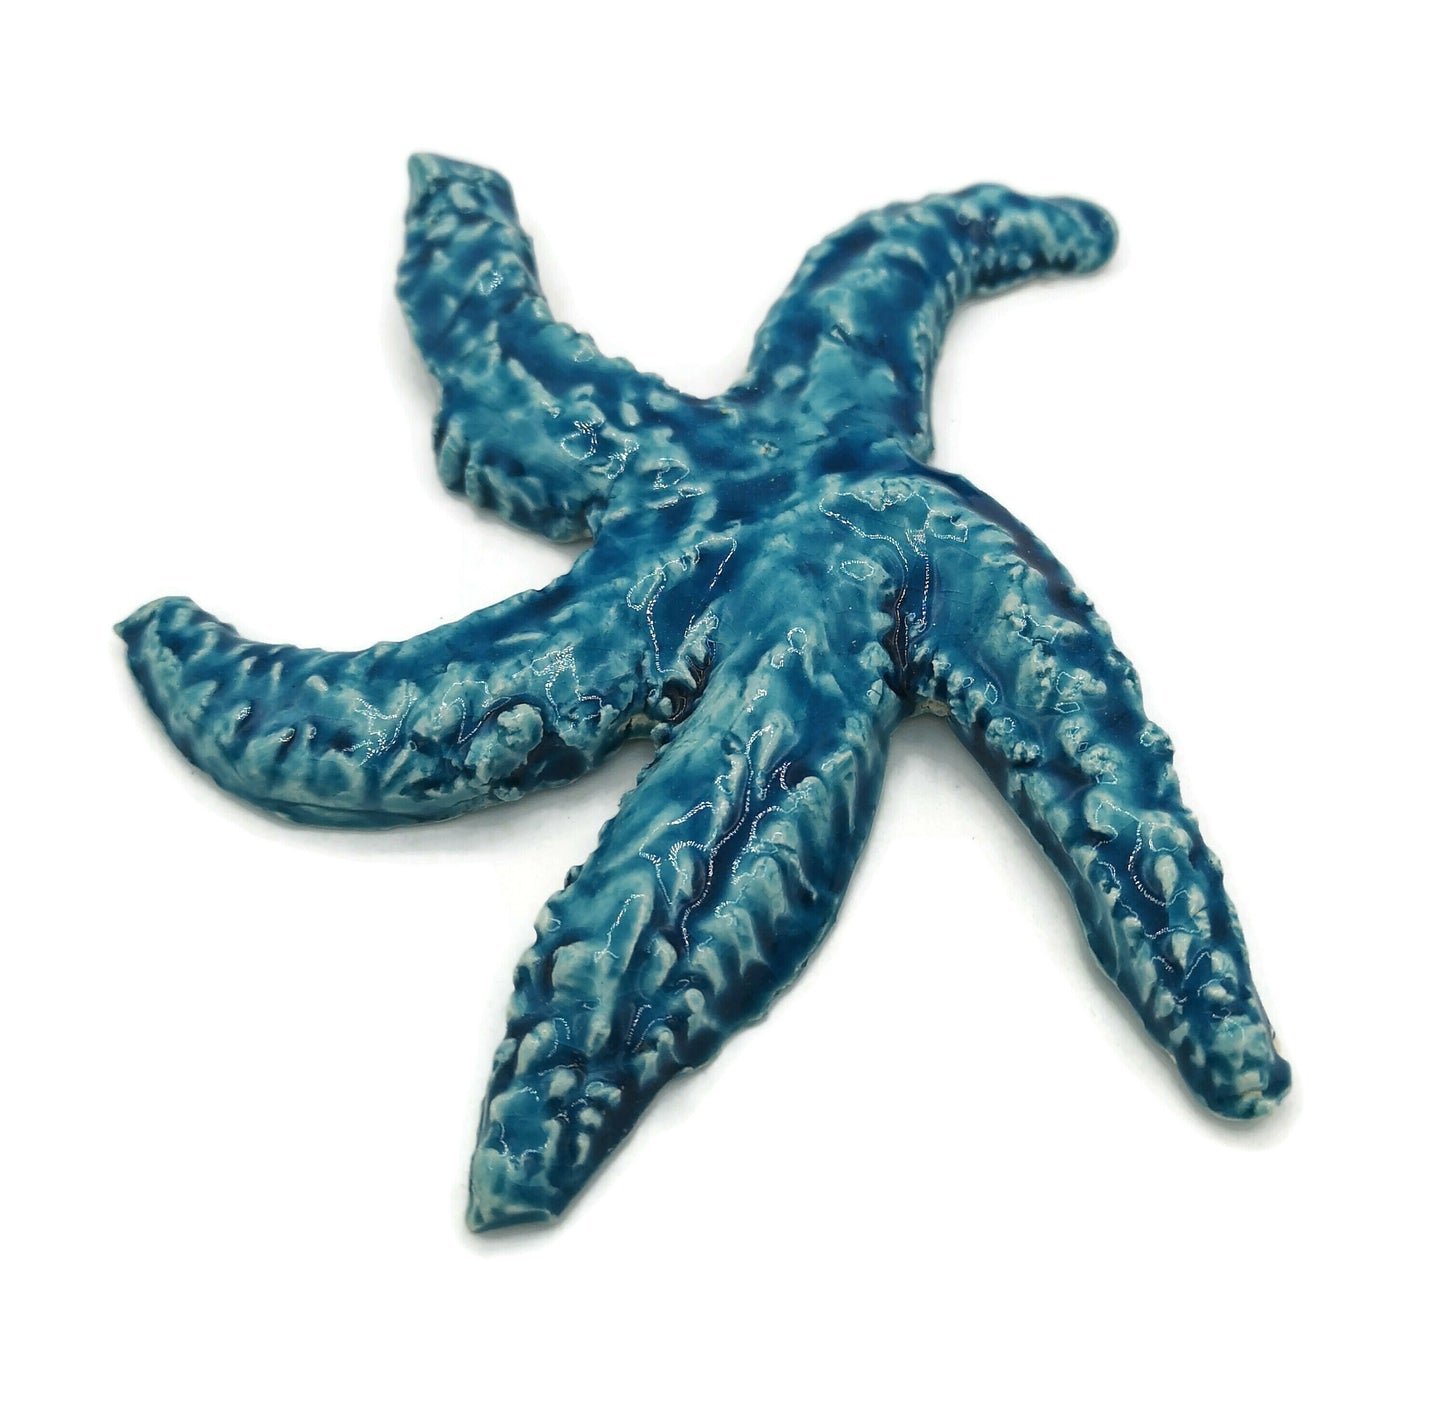 Handmade ceramic starfish tile, starfish wall decor, birthday gift from daughter in law, beach lover gift for women, best sellers - Ceramica Ana Rafael